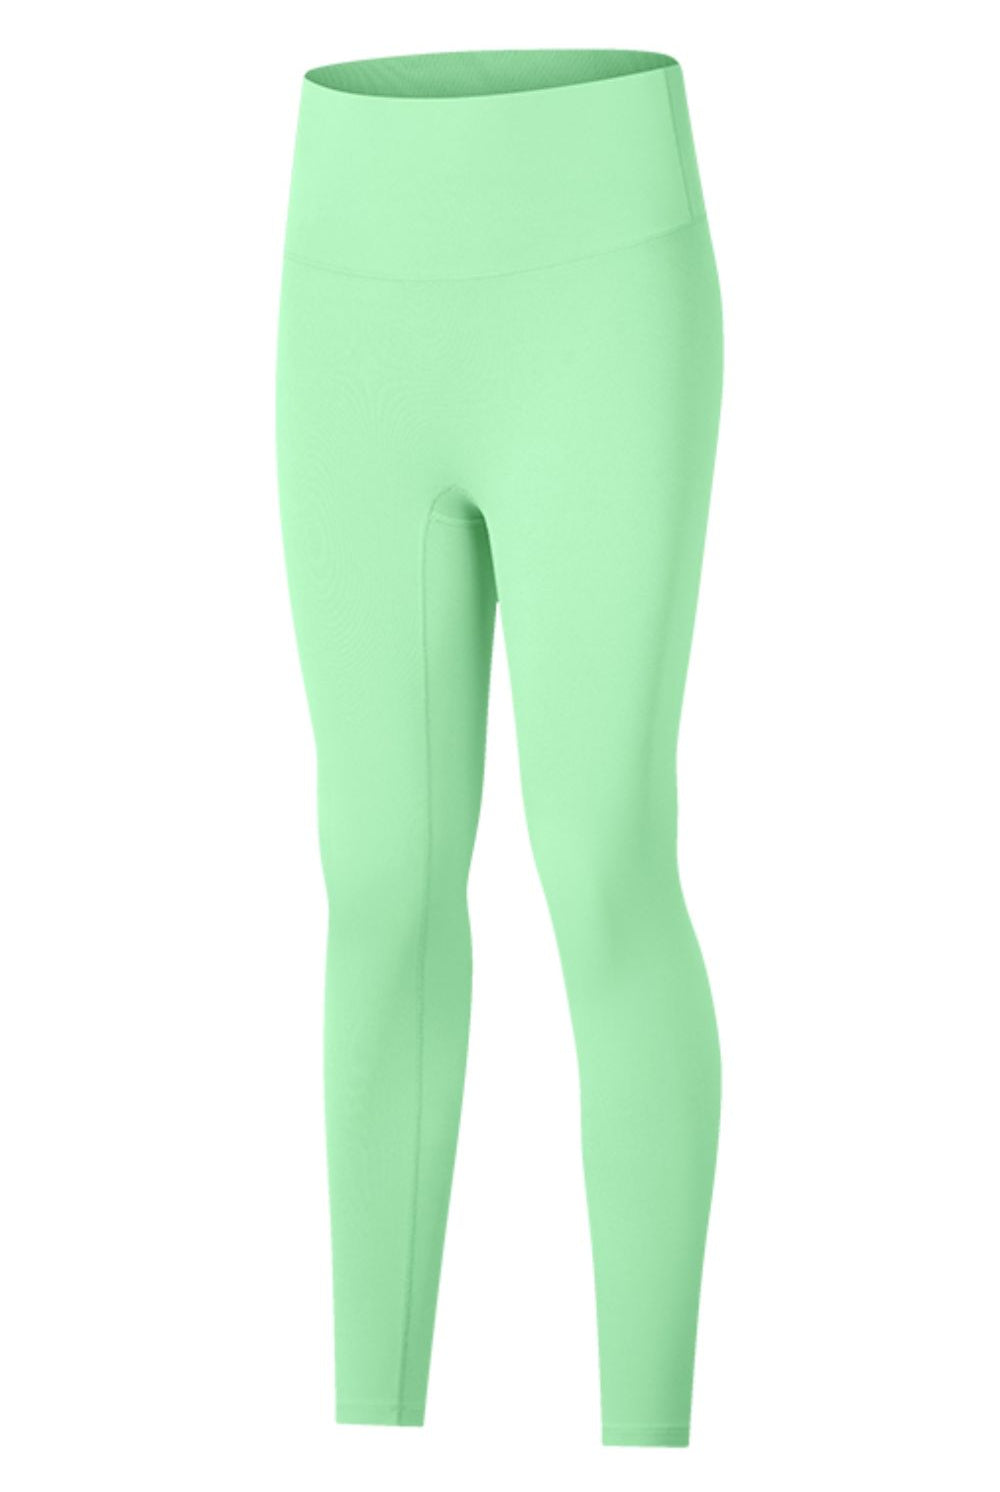 Pale Green High-Rise Wide Waistband Yoga Leggings activewear